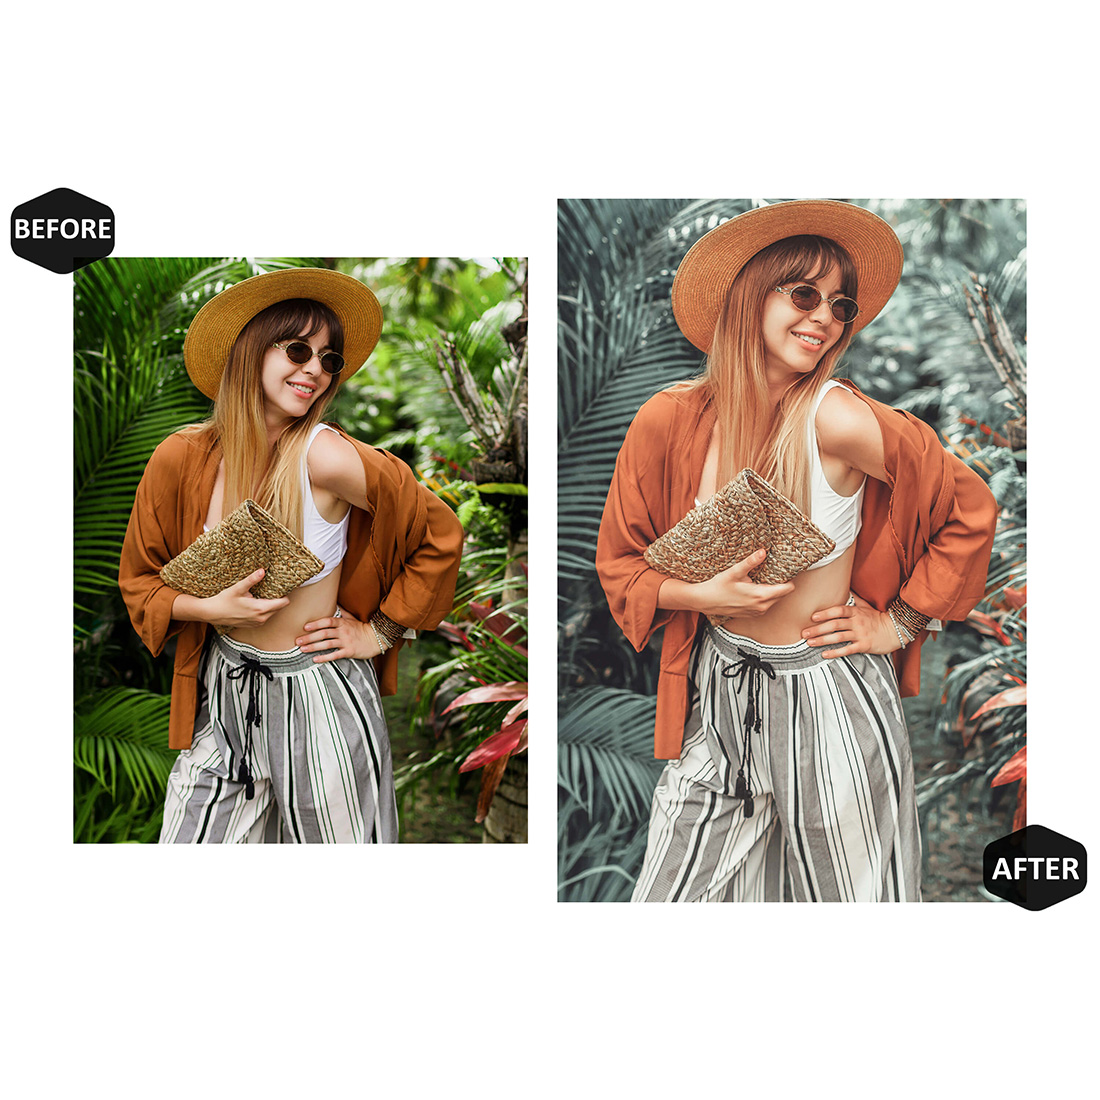 18 Matty Summer Lightroom Presets, Green Avocado Mobile Preset, Tropical Forest Desktop Lifestyle Portrait Theme For Instagram LR Filter DNG preview image.